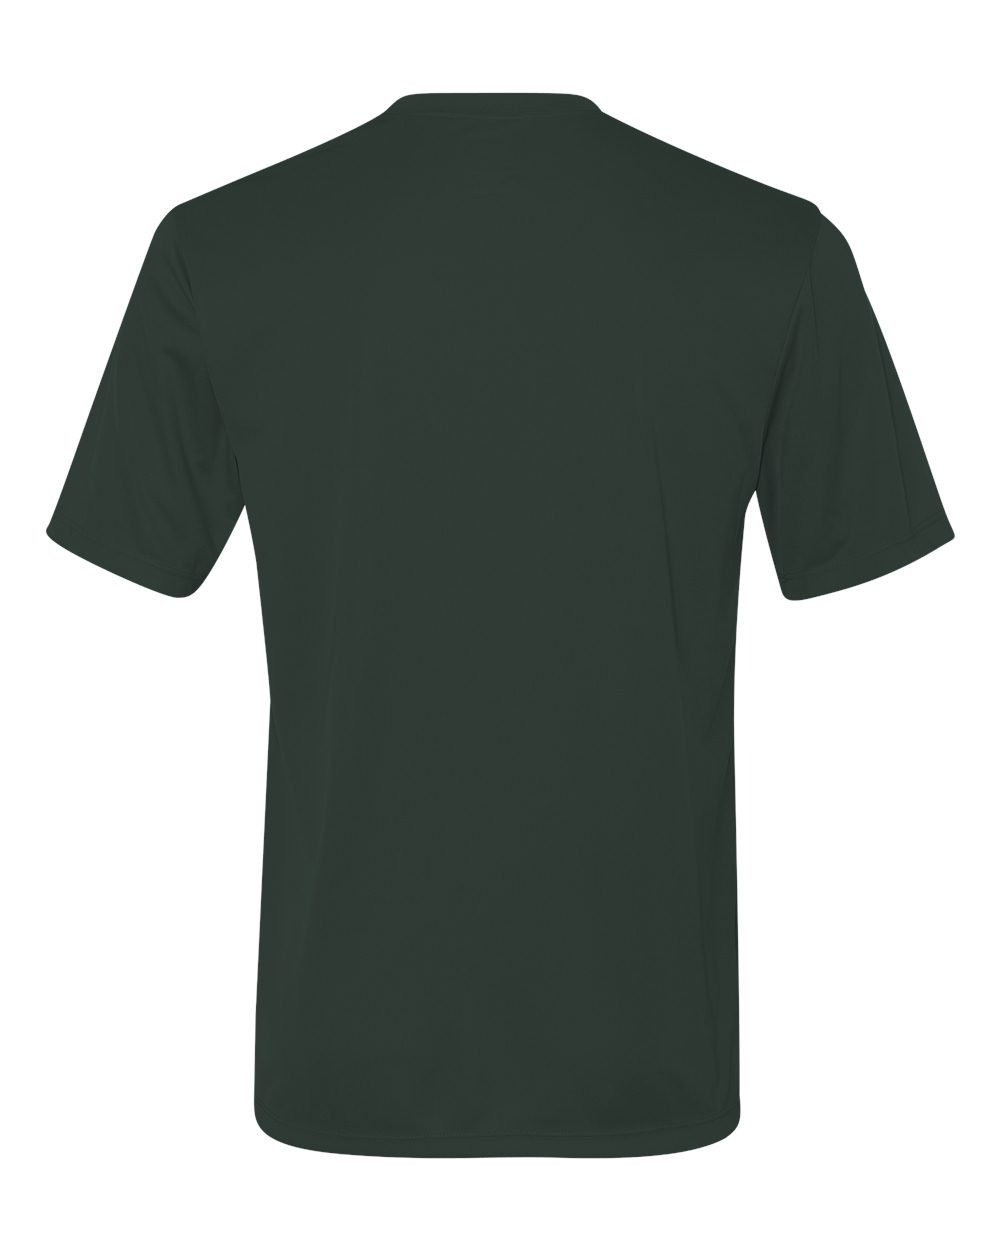 Hanes Cool Dri Tagless Men's T-Shirt_Deep Forest_3XL